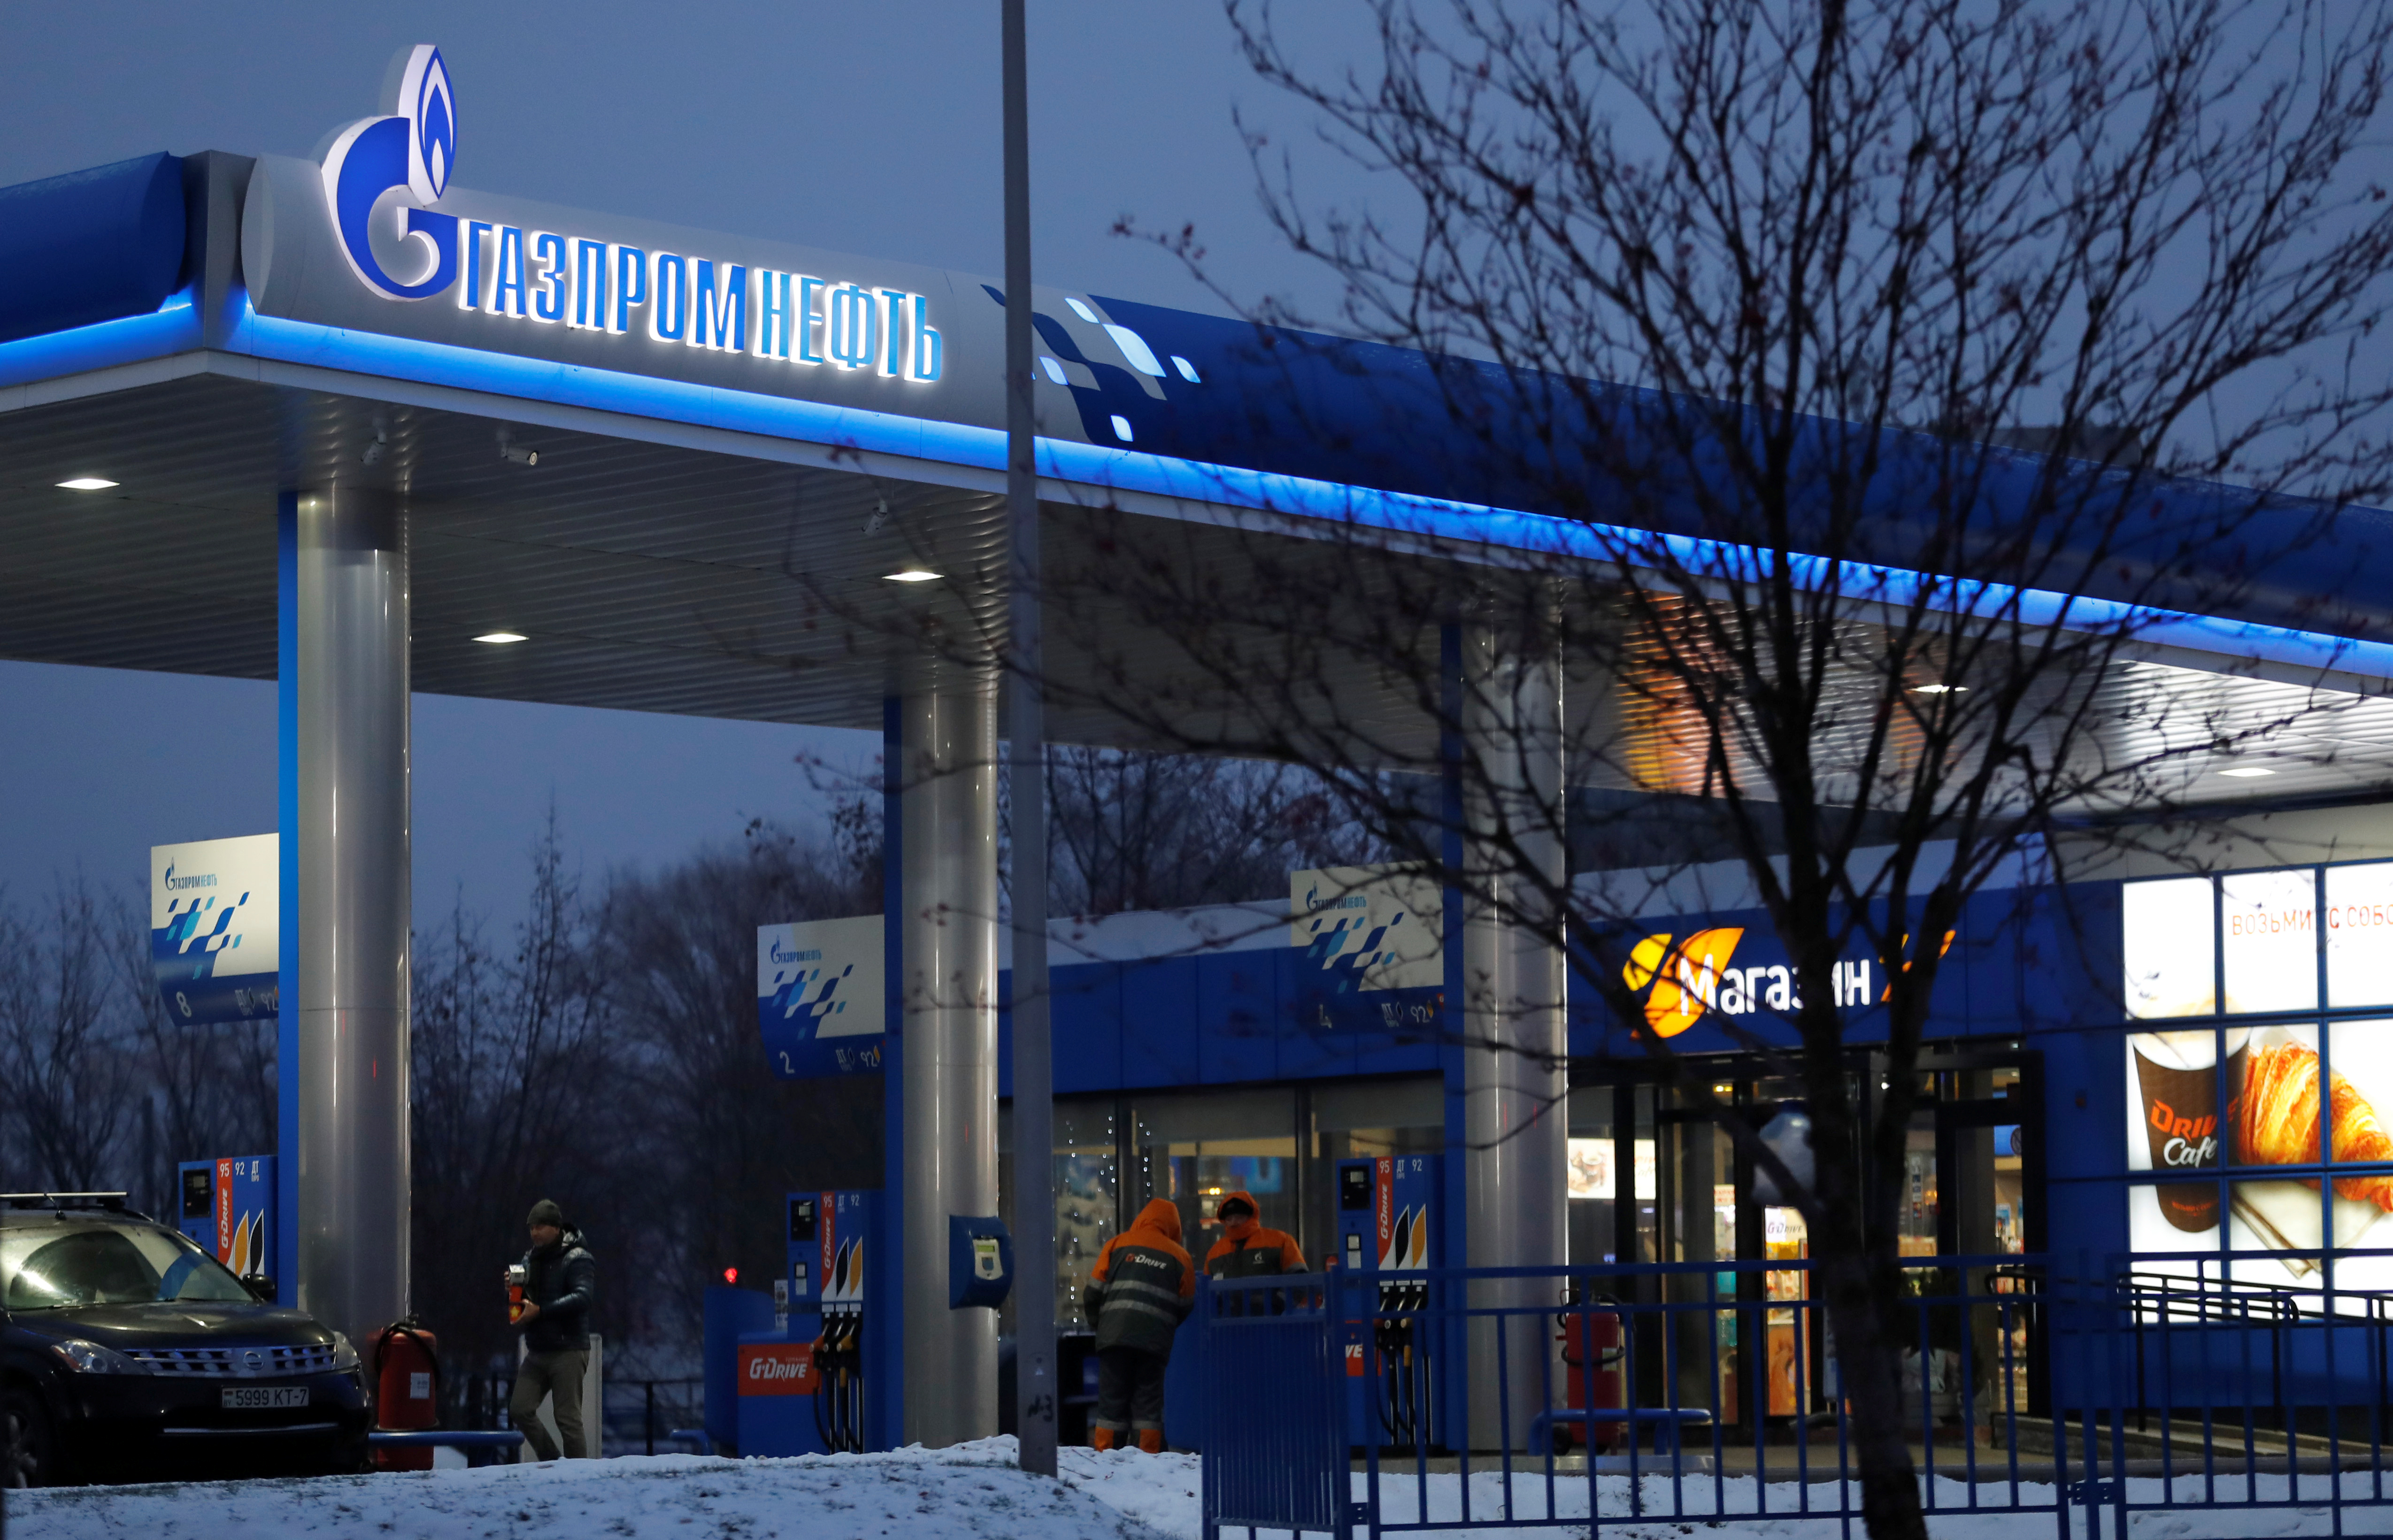 Gazpromneft petrol station is seen in Minsk, Belarus December 16, 2018. REUTERS/Vasily Fedosenko